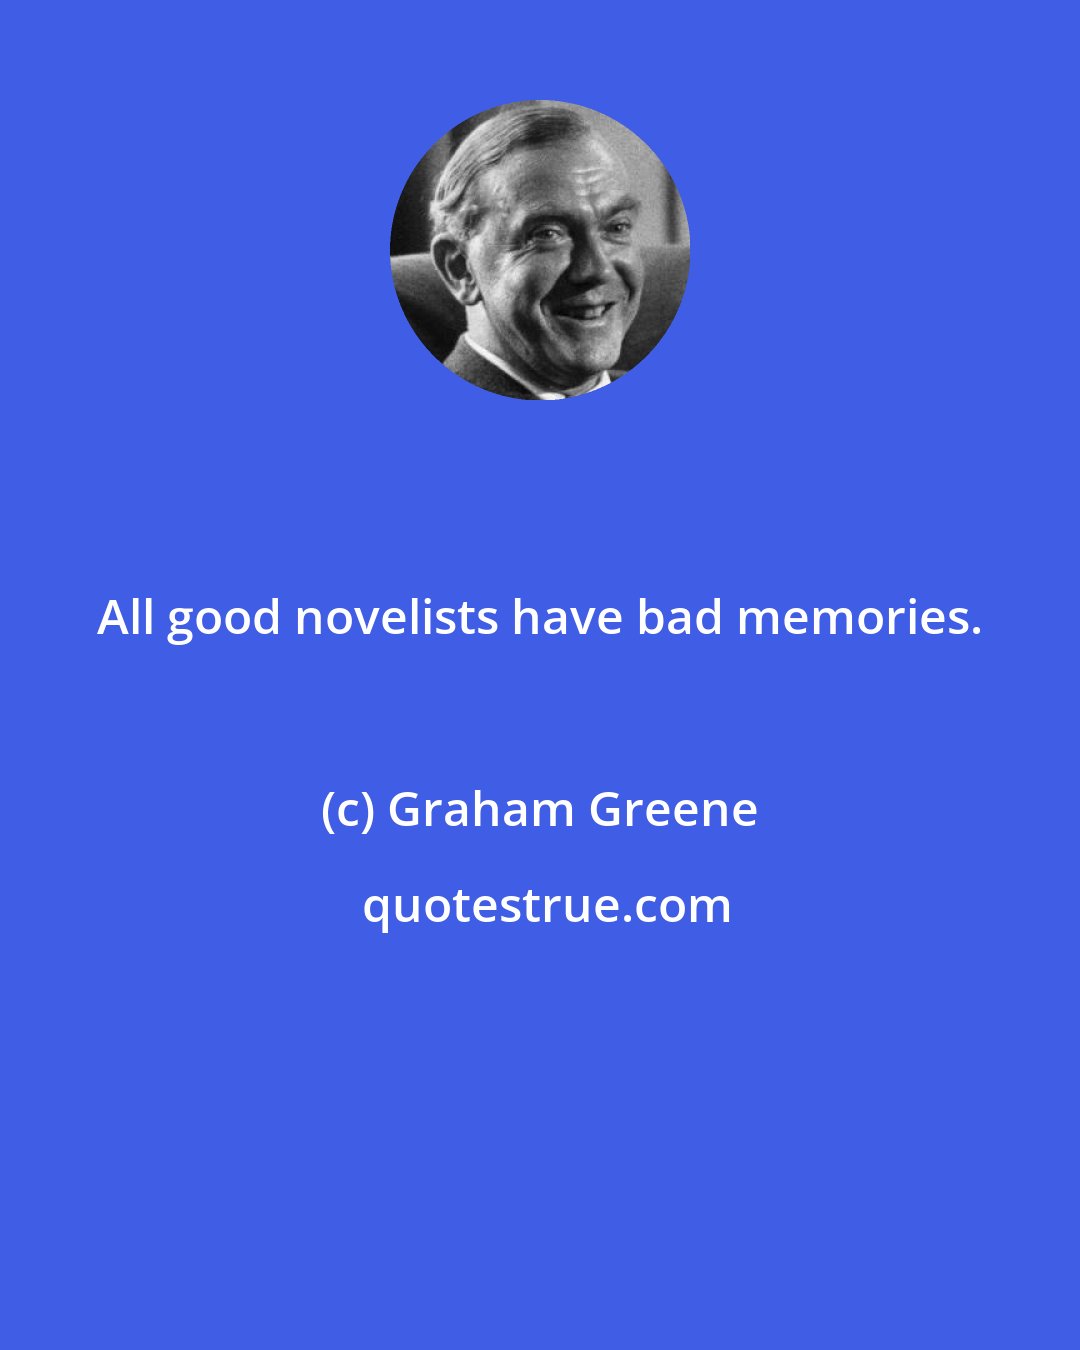 Graham Greene: All good novelists have bad memories.